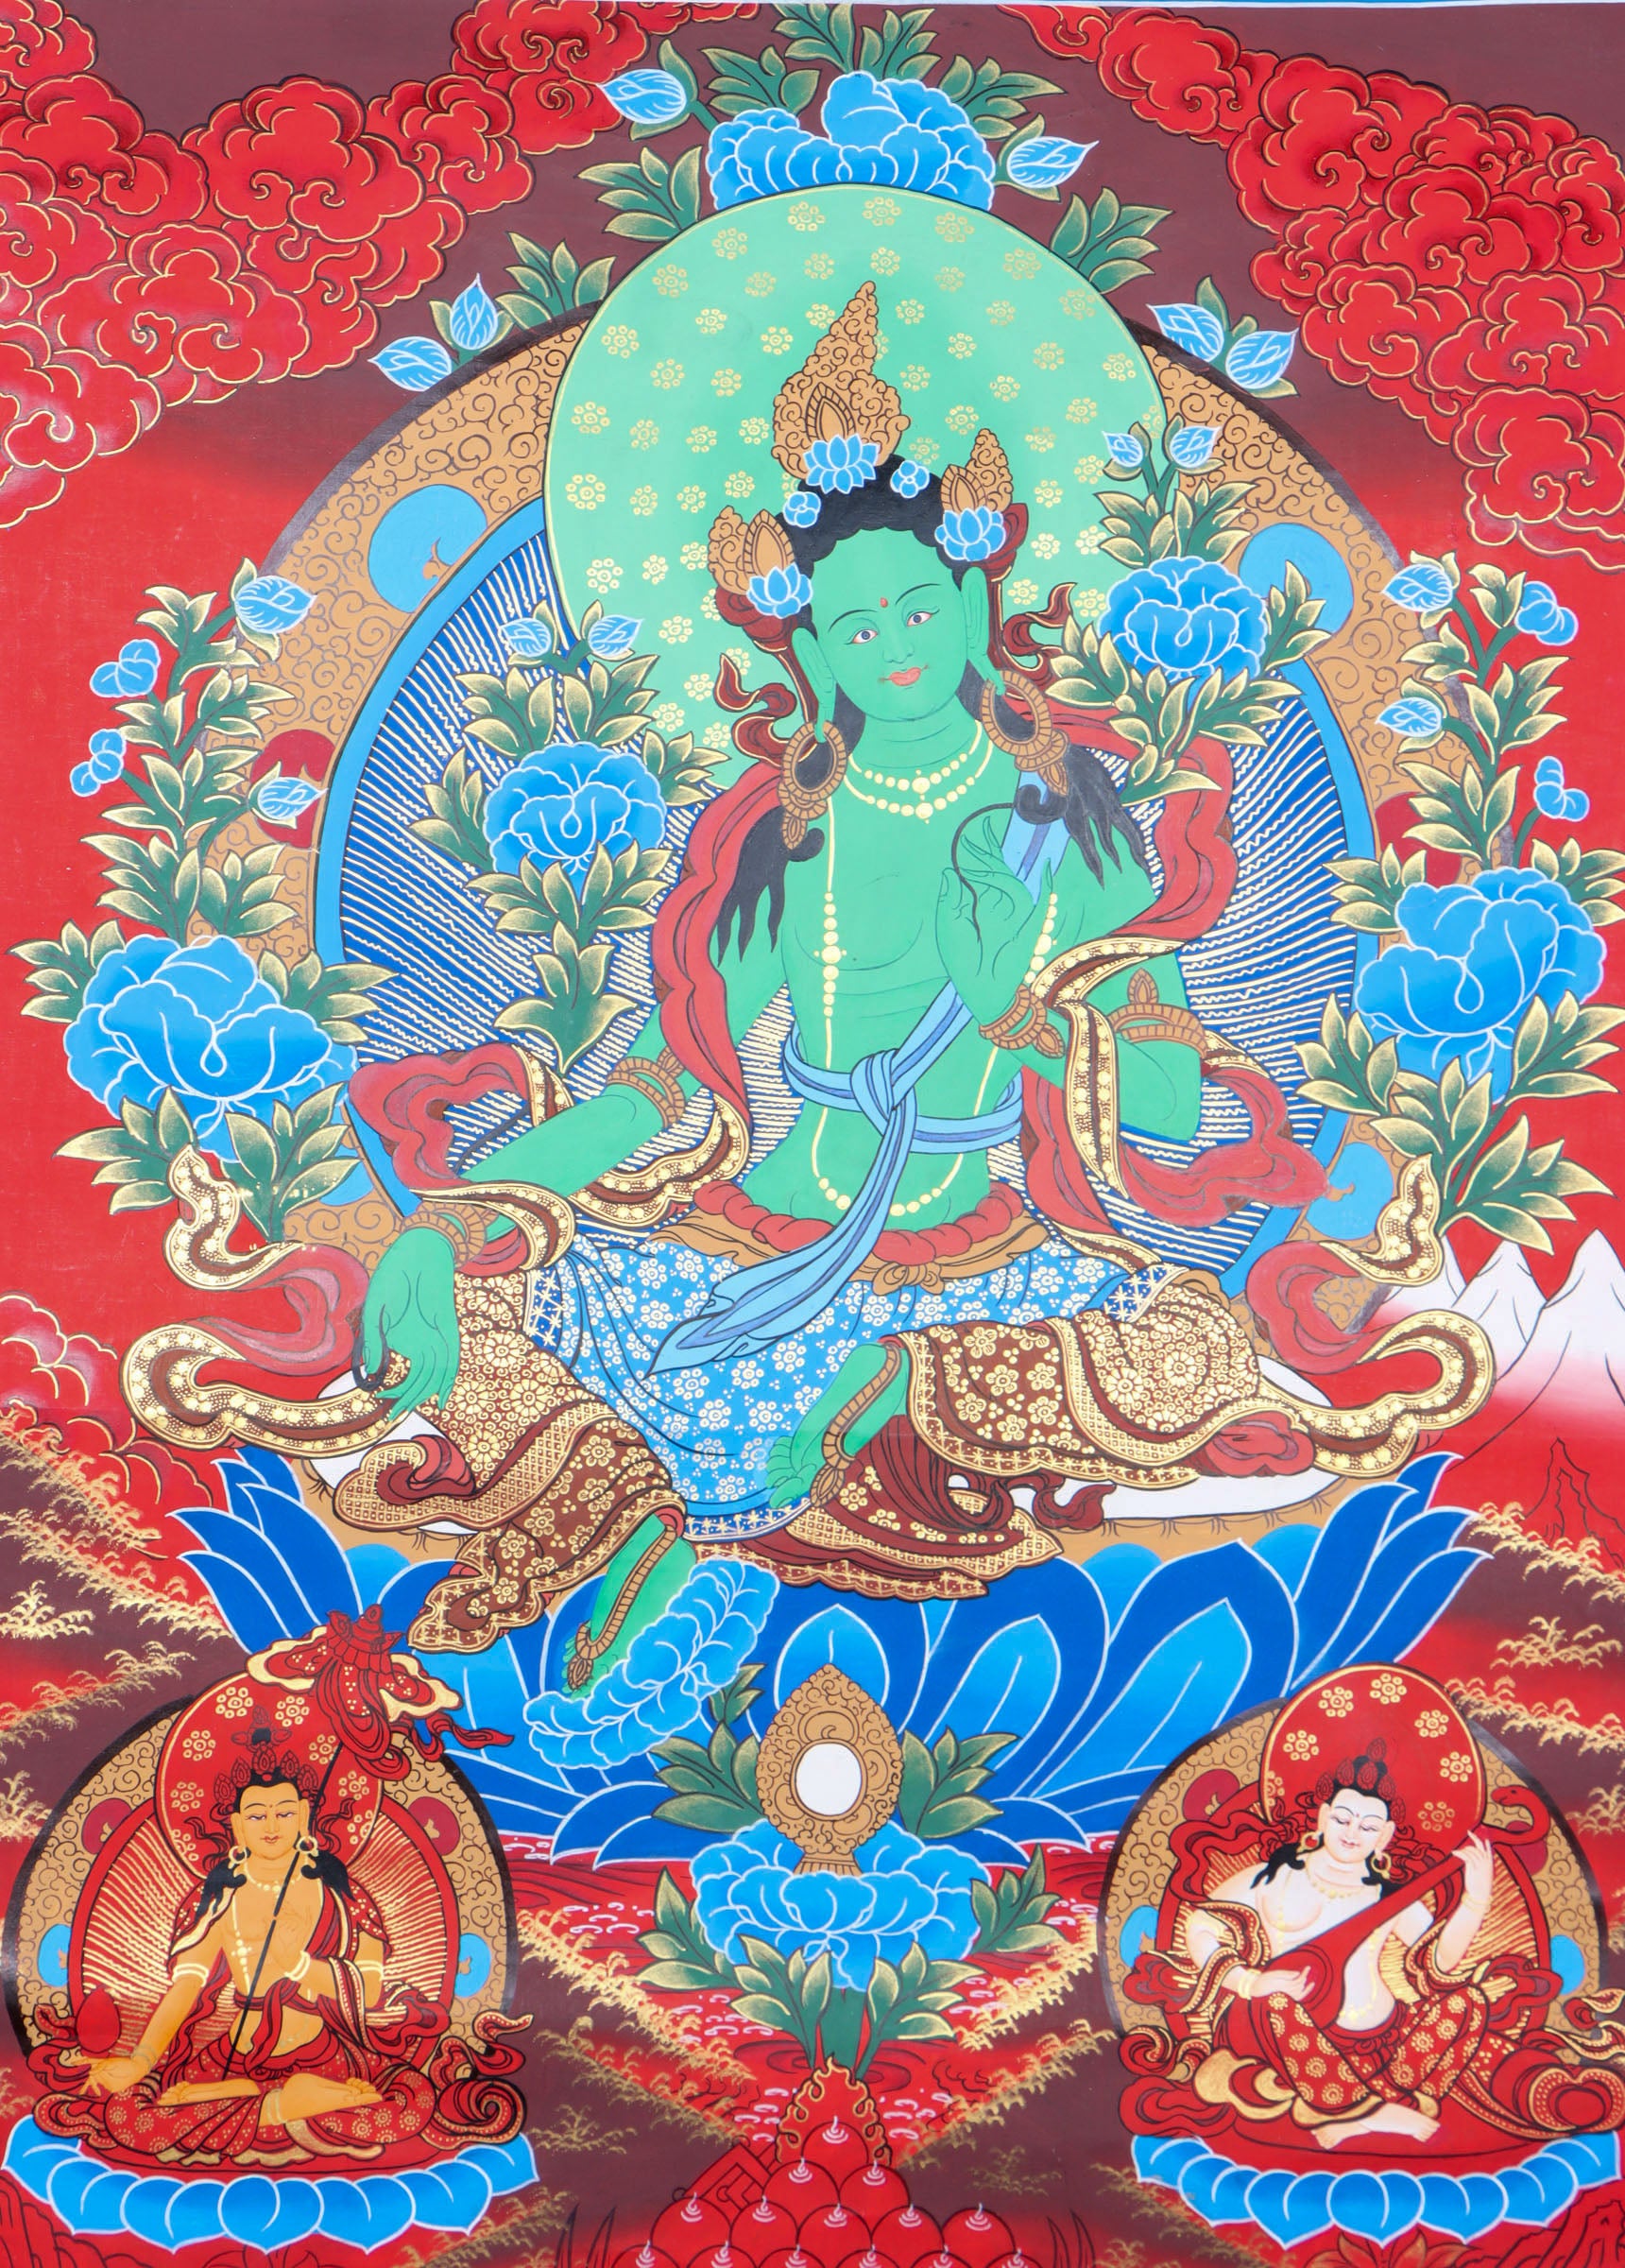 Green Tara thangka is ideal for spiritual meditation and physical and mental transformation.